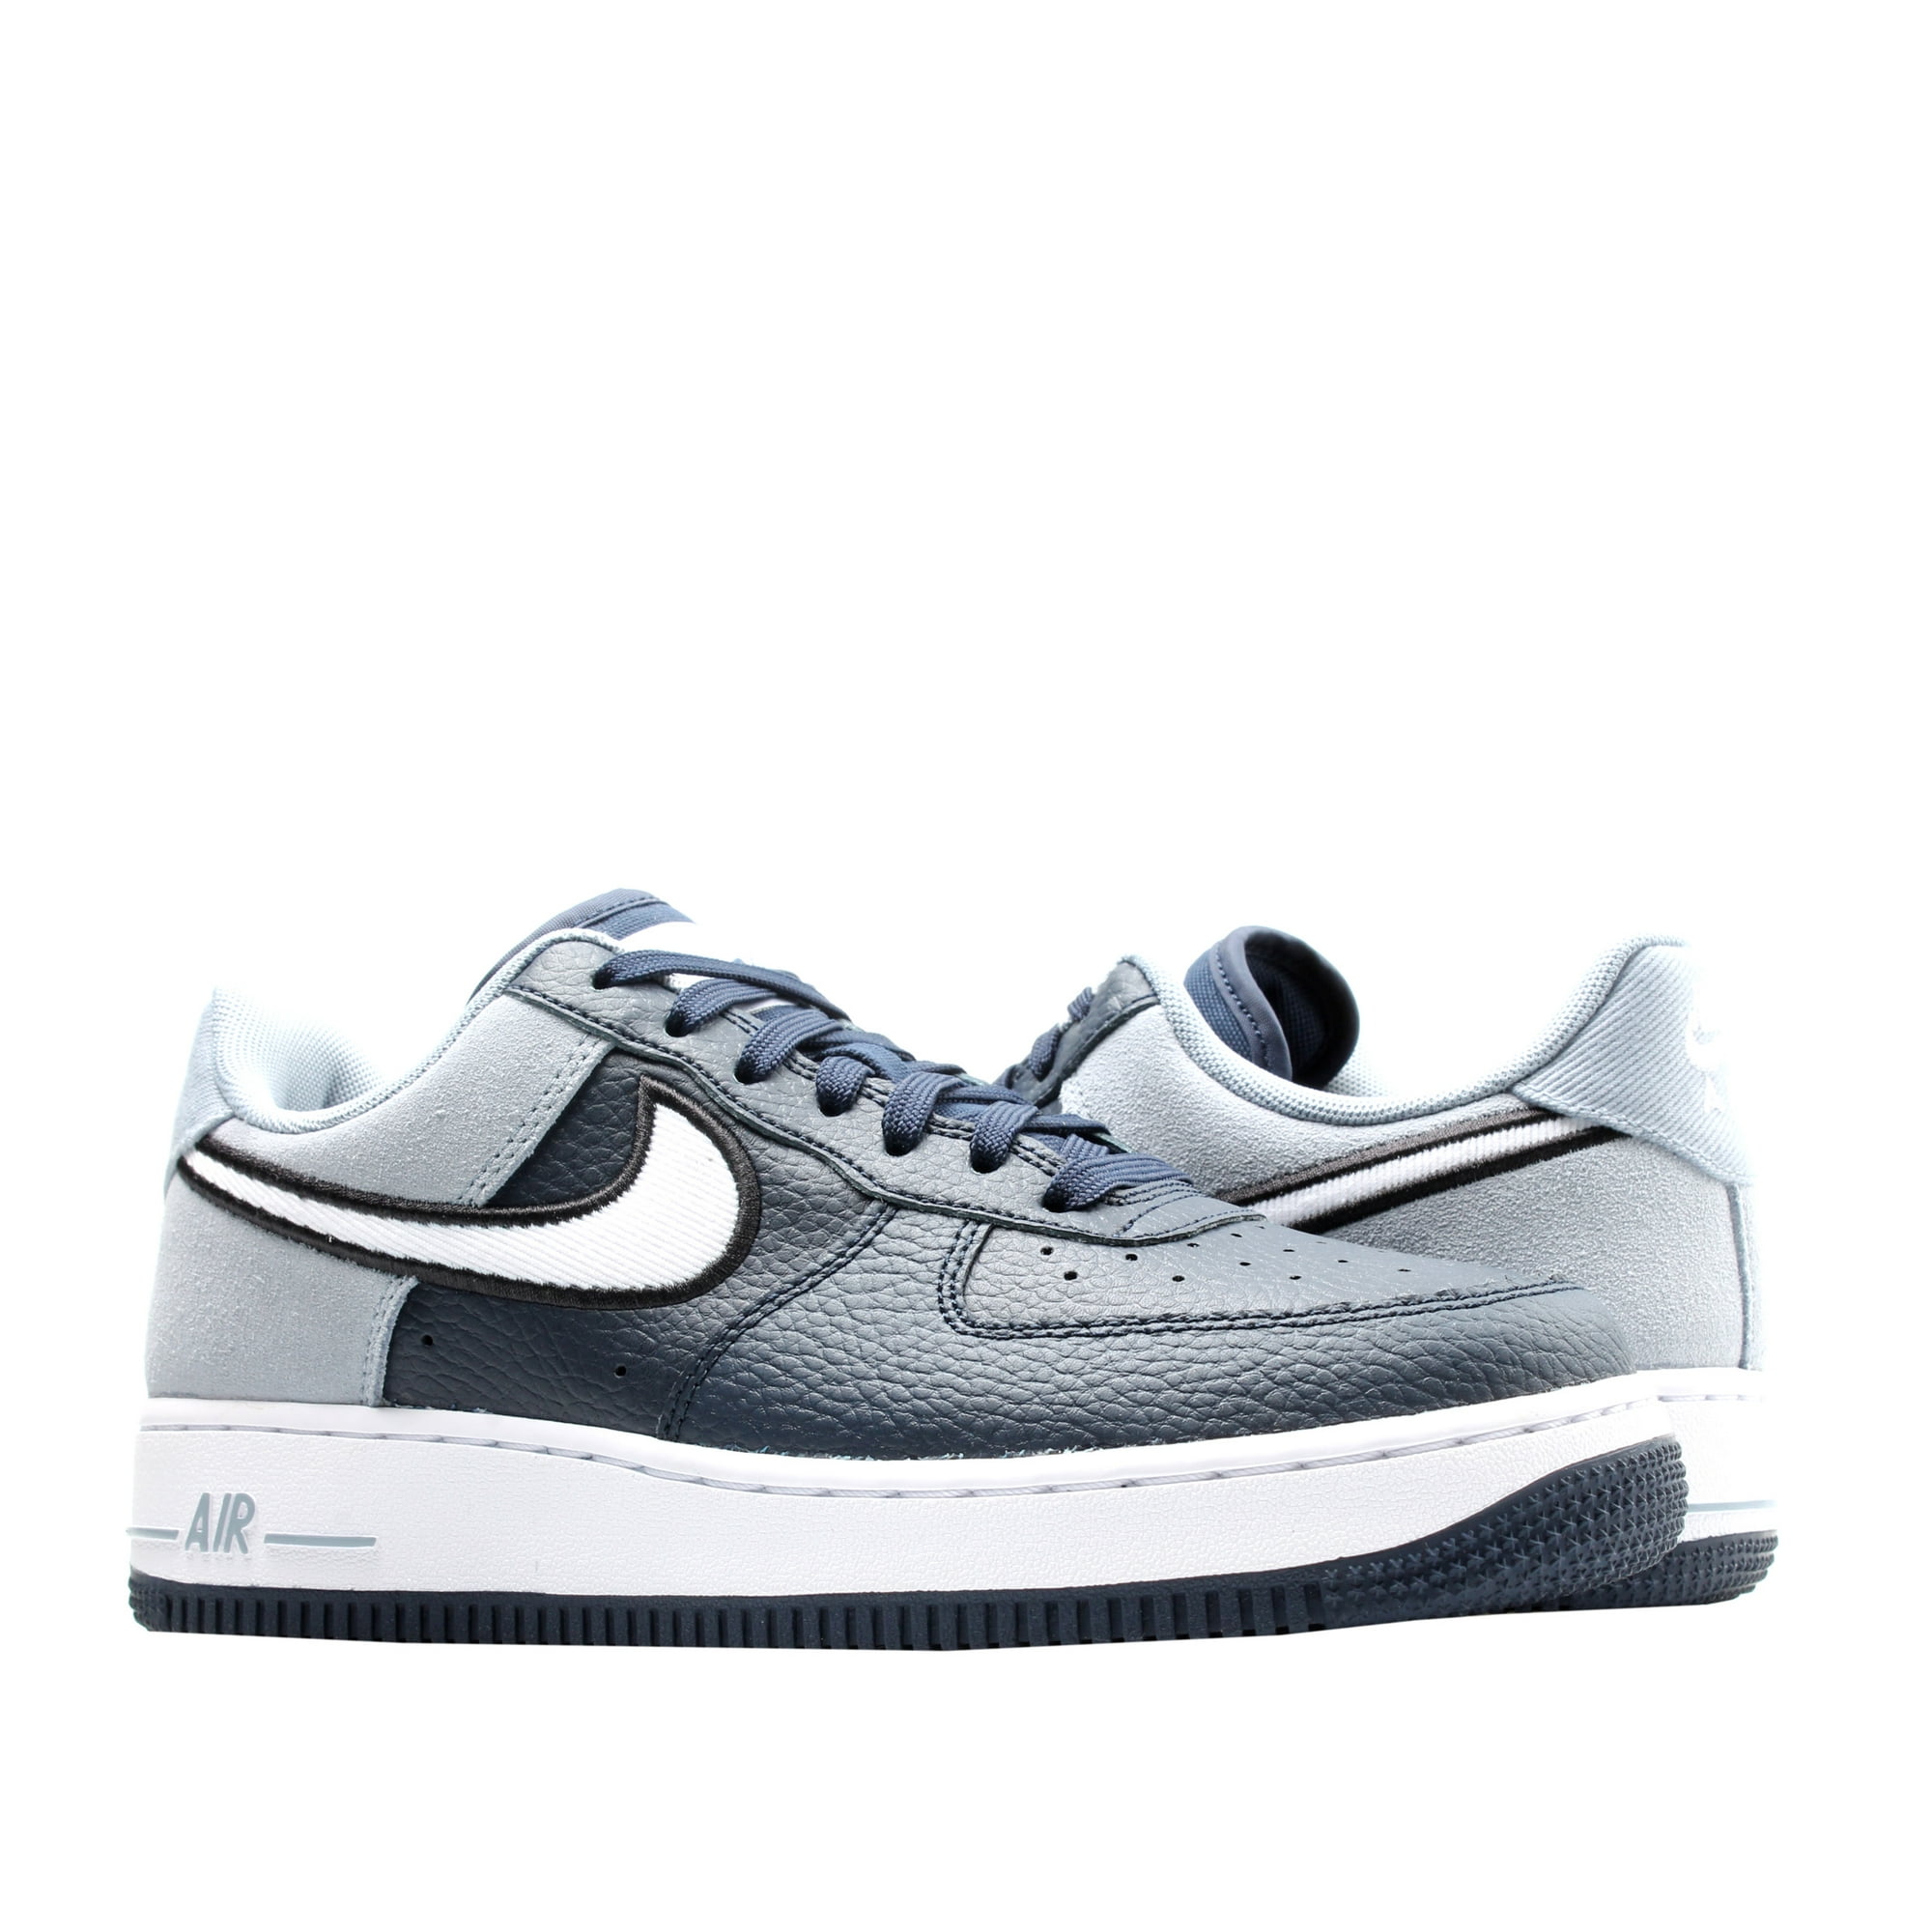  Nike Mens Air Force 1 '07 Lv8 1 Basketball Shoe (9